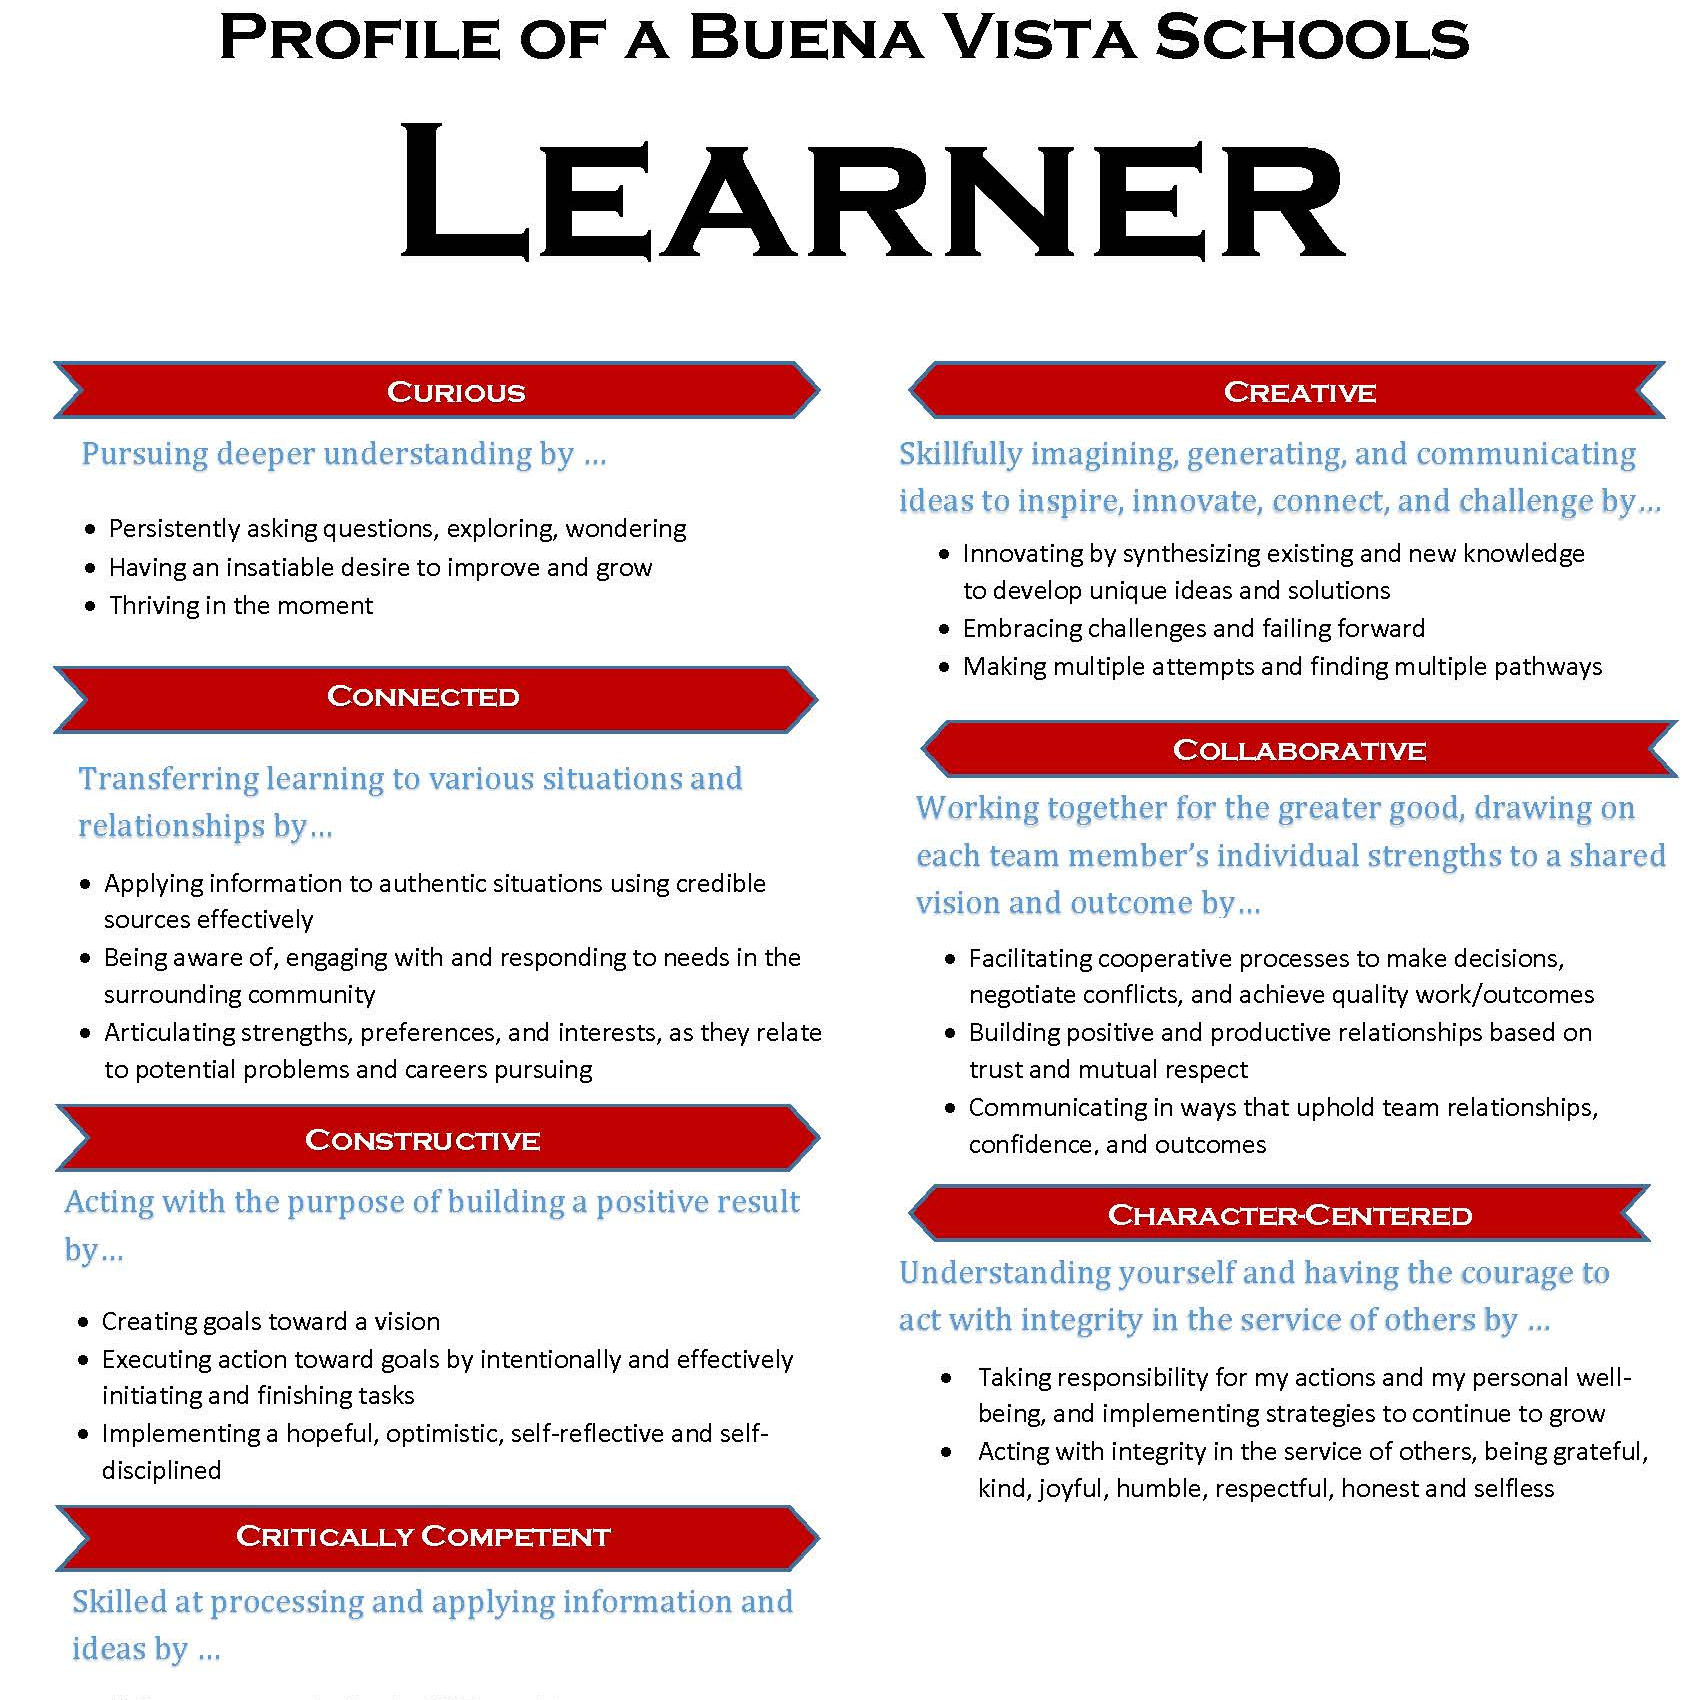 Profile of Learner - 7 Cs